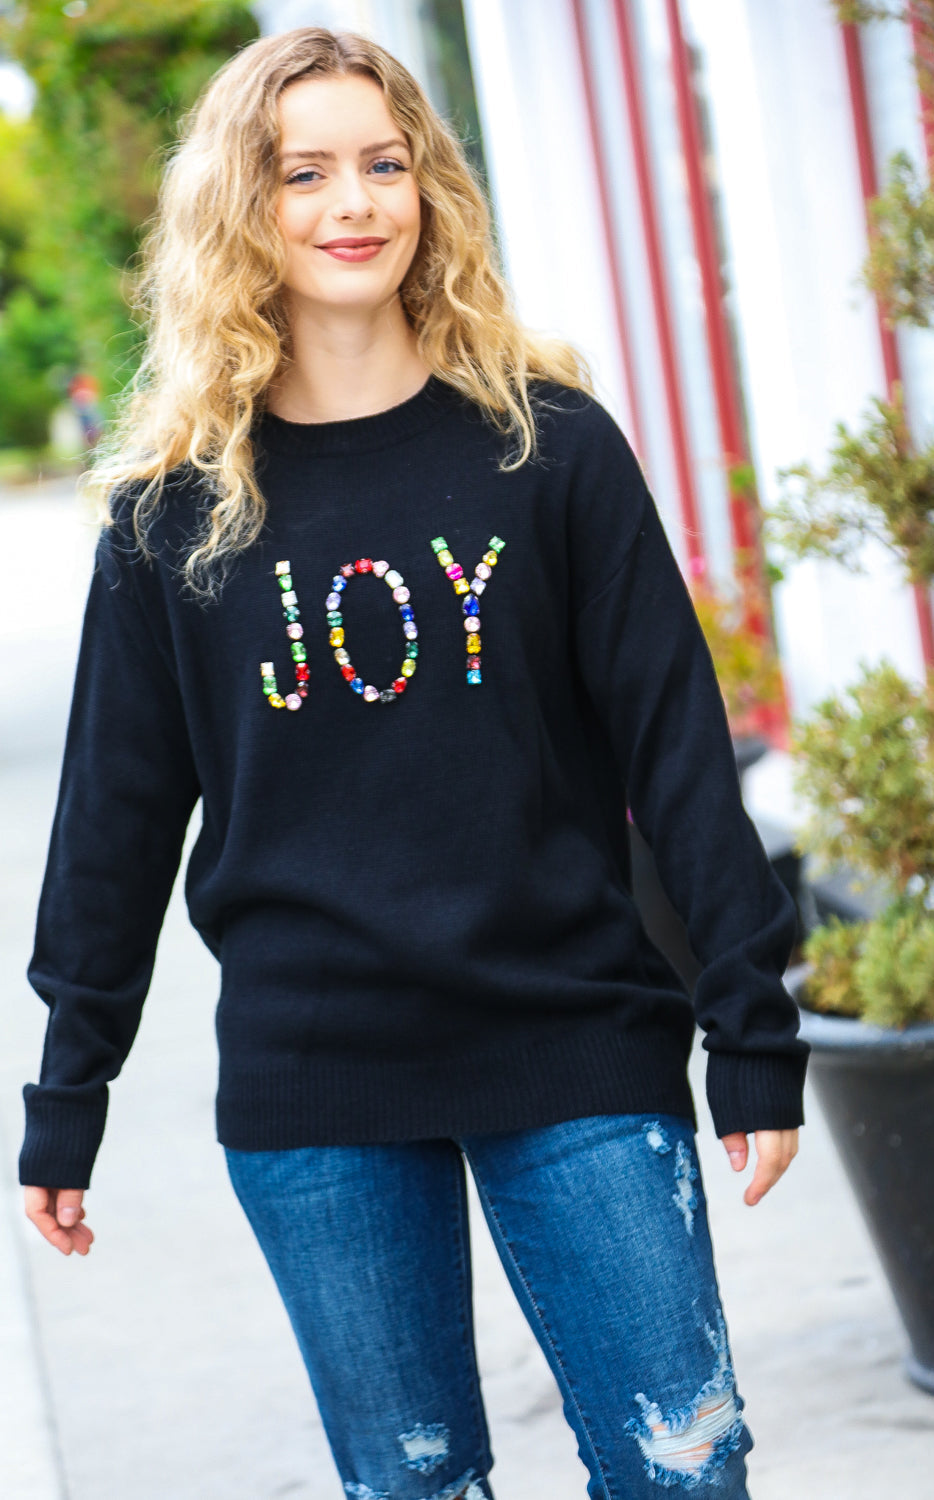 Give Back JOY Jewel Beaded Black Sweater Haptics